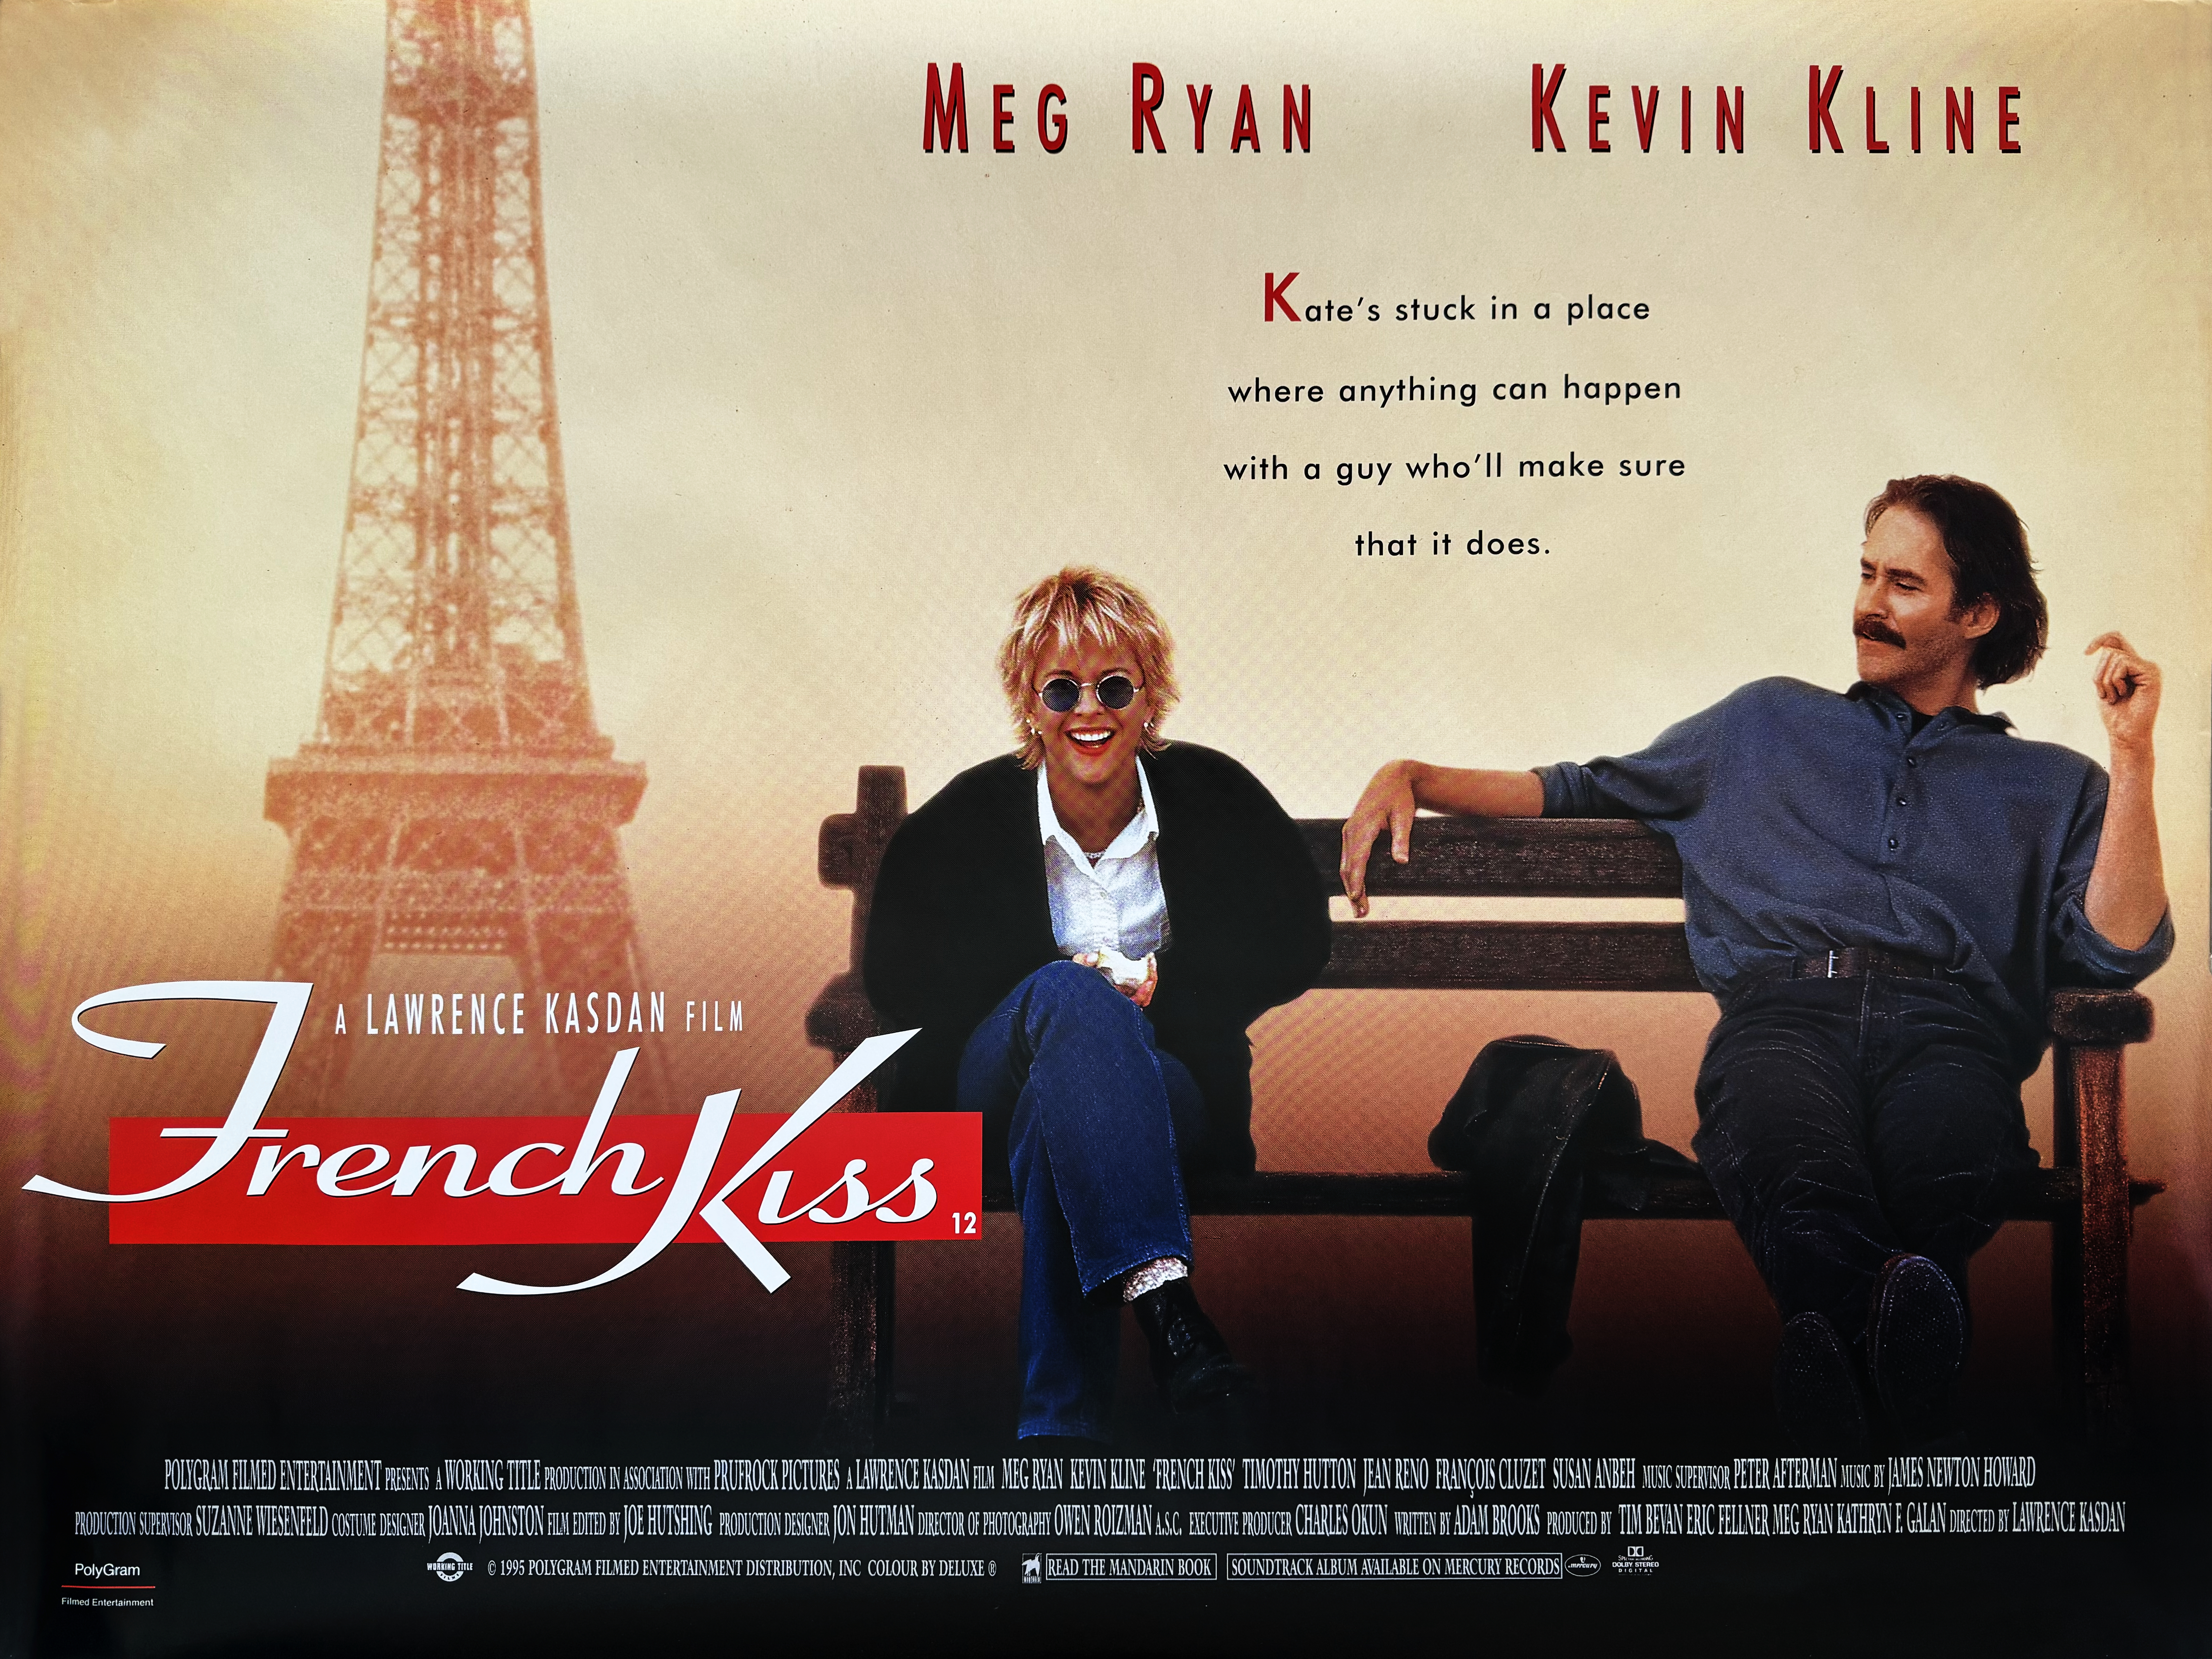 FRENCH KISS film quad poster